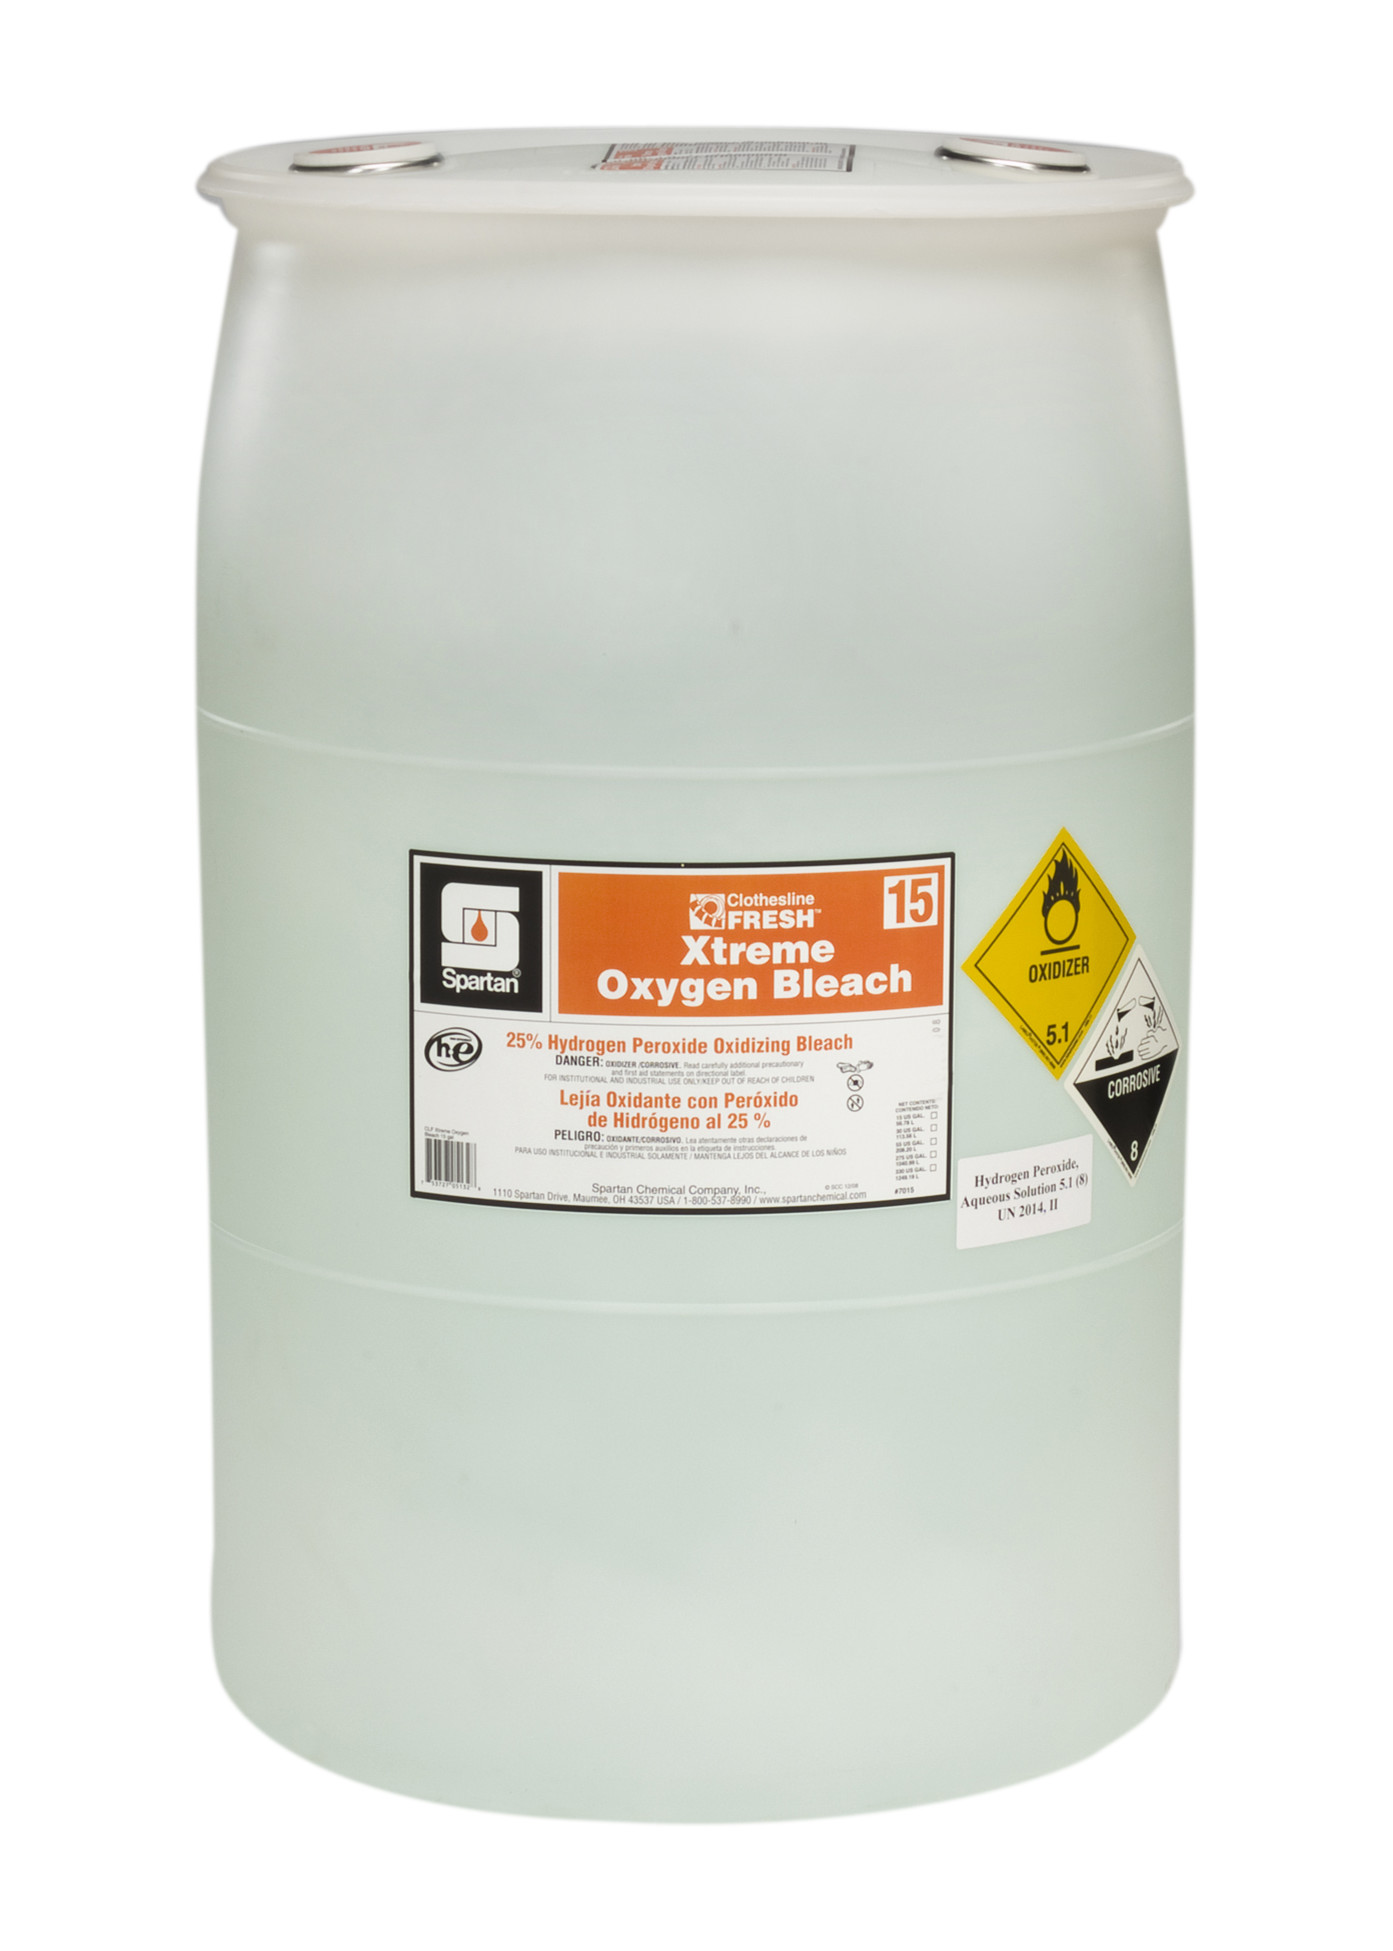 Spartan Chemical Company Clothesline Fresh Xtreme Oxygen Bleach 15, 55 GAL DRUM